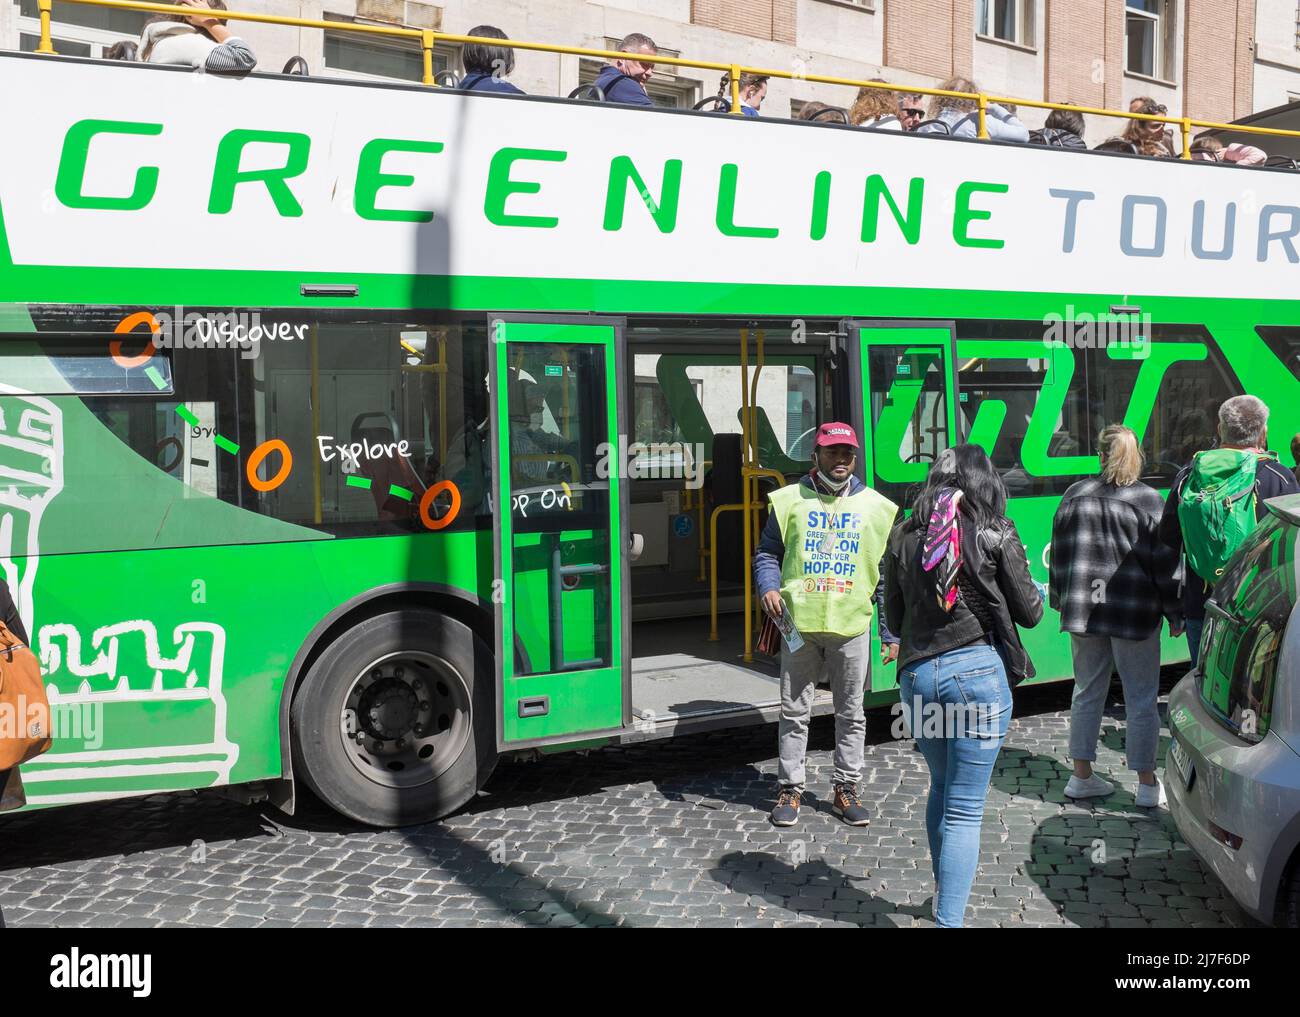 Greenline Bus Tours Roma Italia Foto de stock